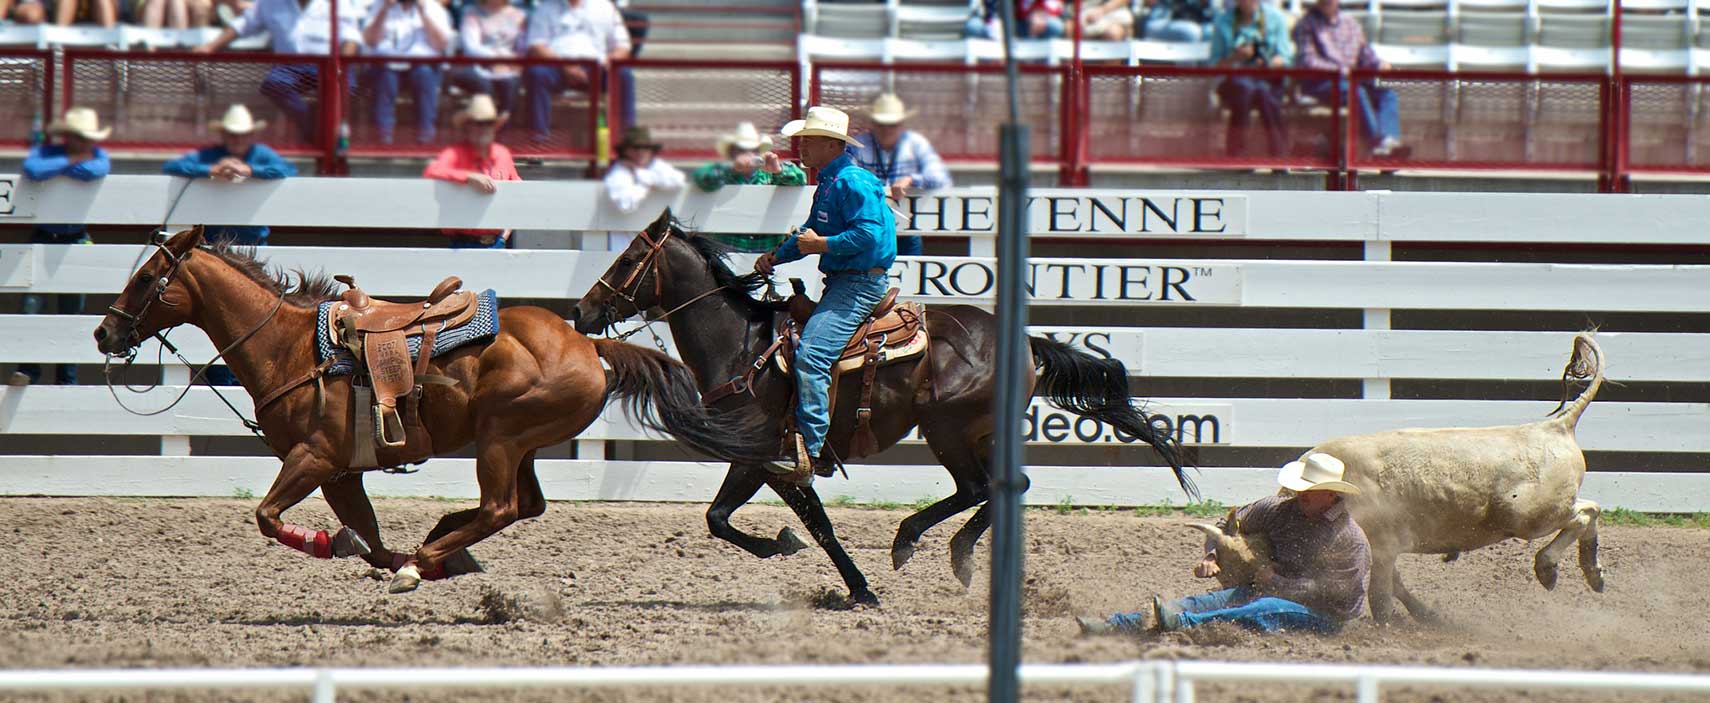 Cheyenne Frontier Days Rodeo, Cheyenne WY